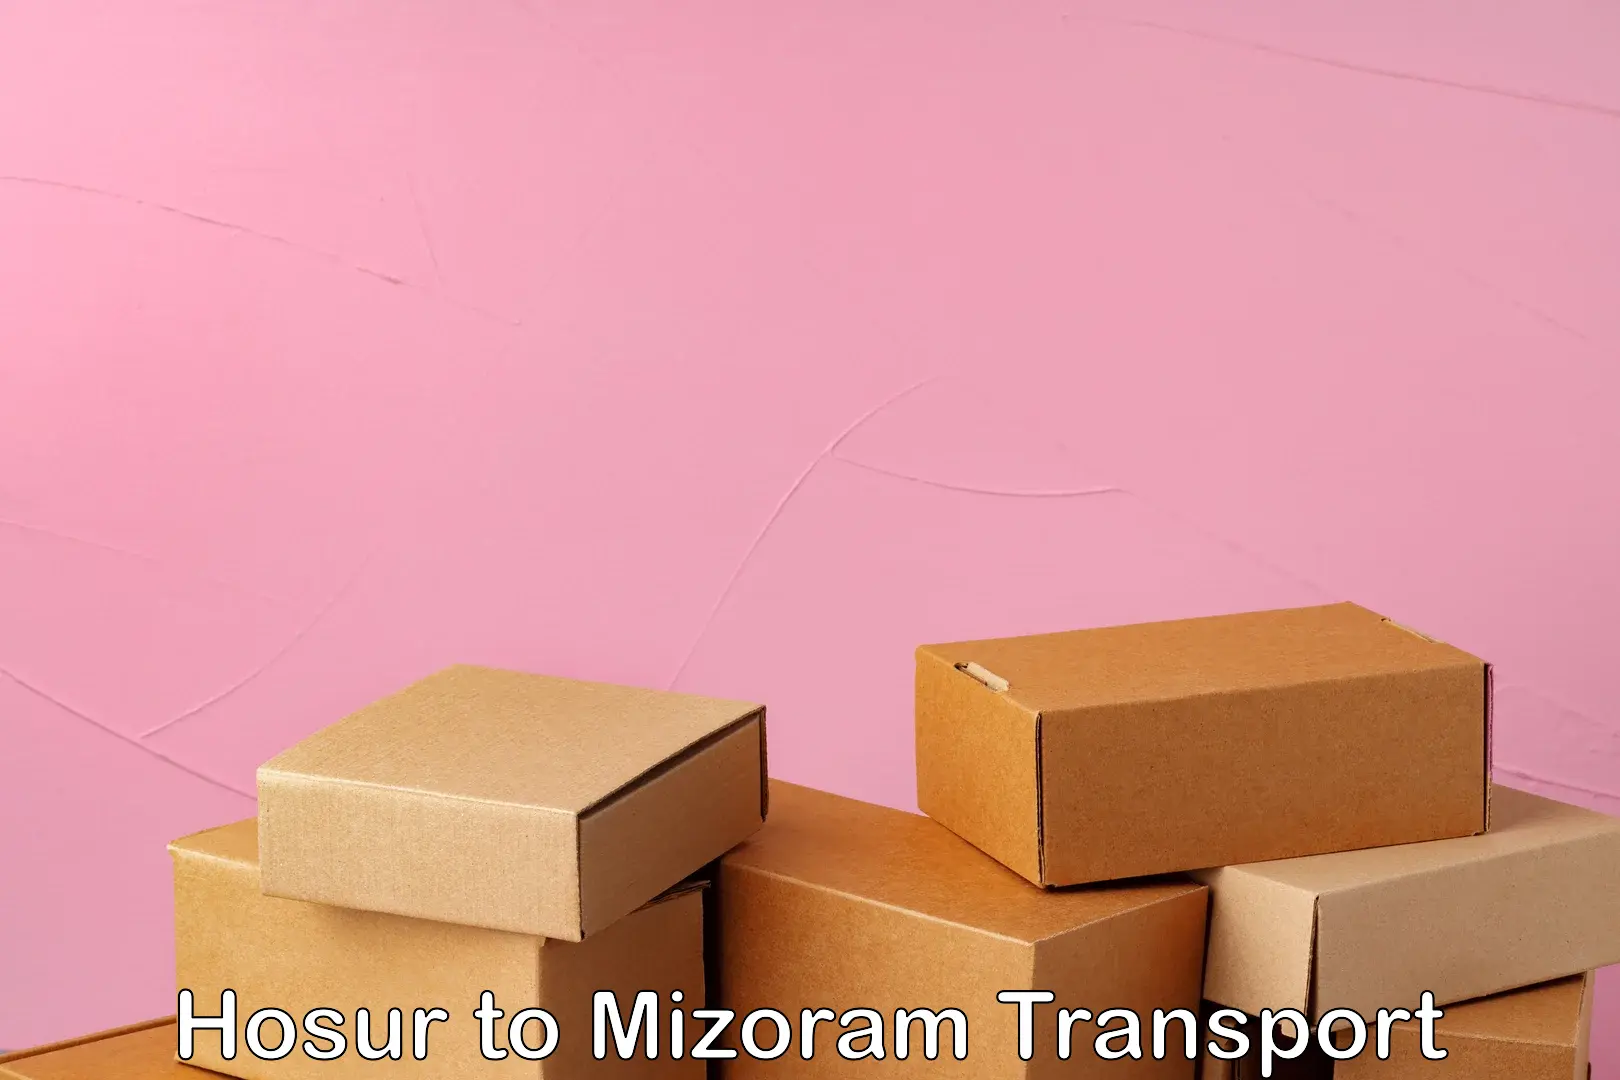 Online transport service Hosur to Mizoram